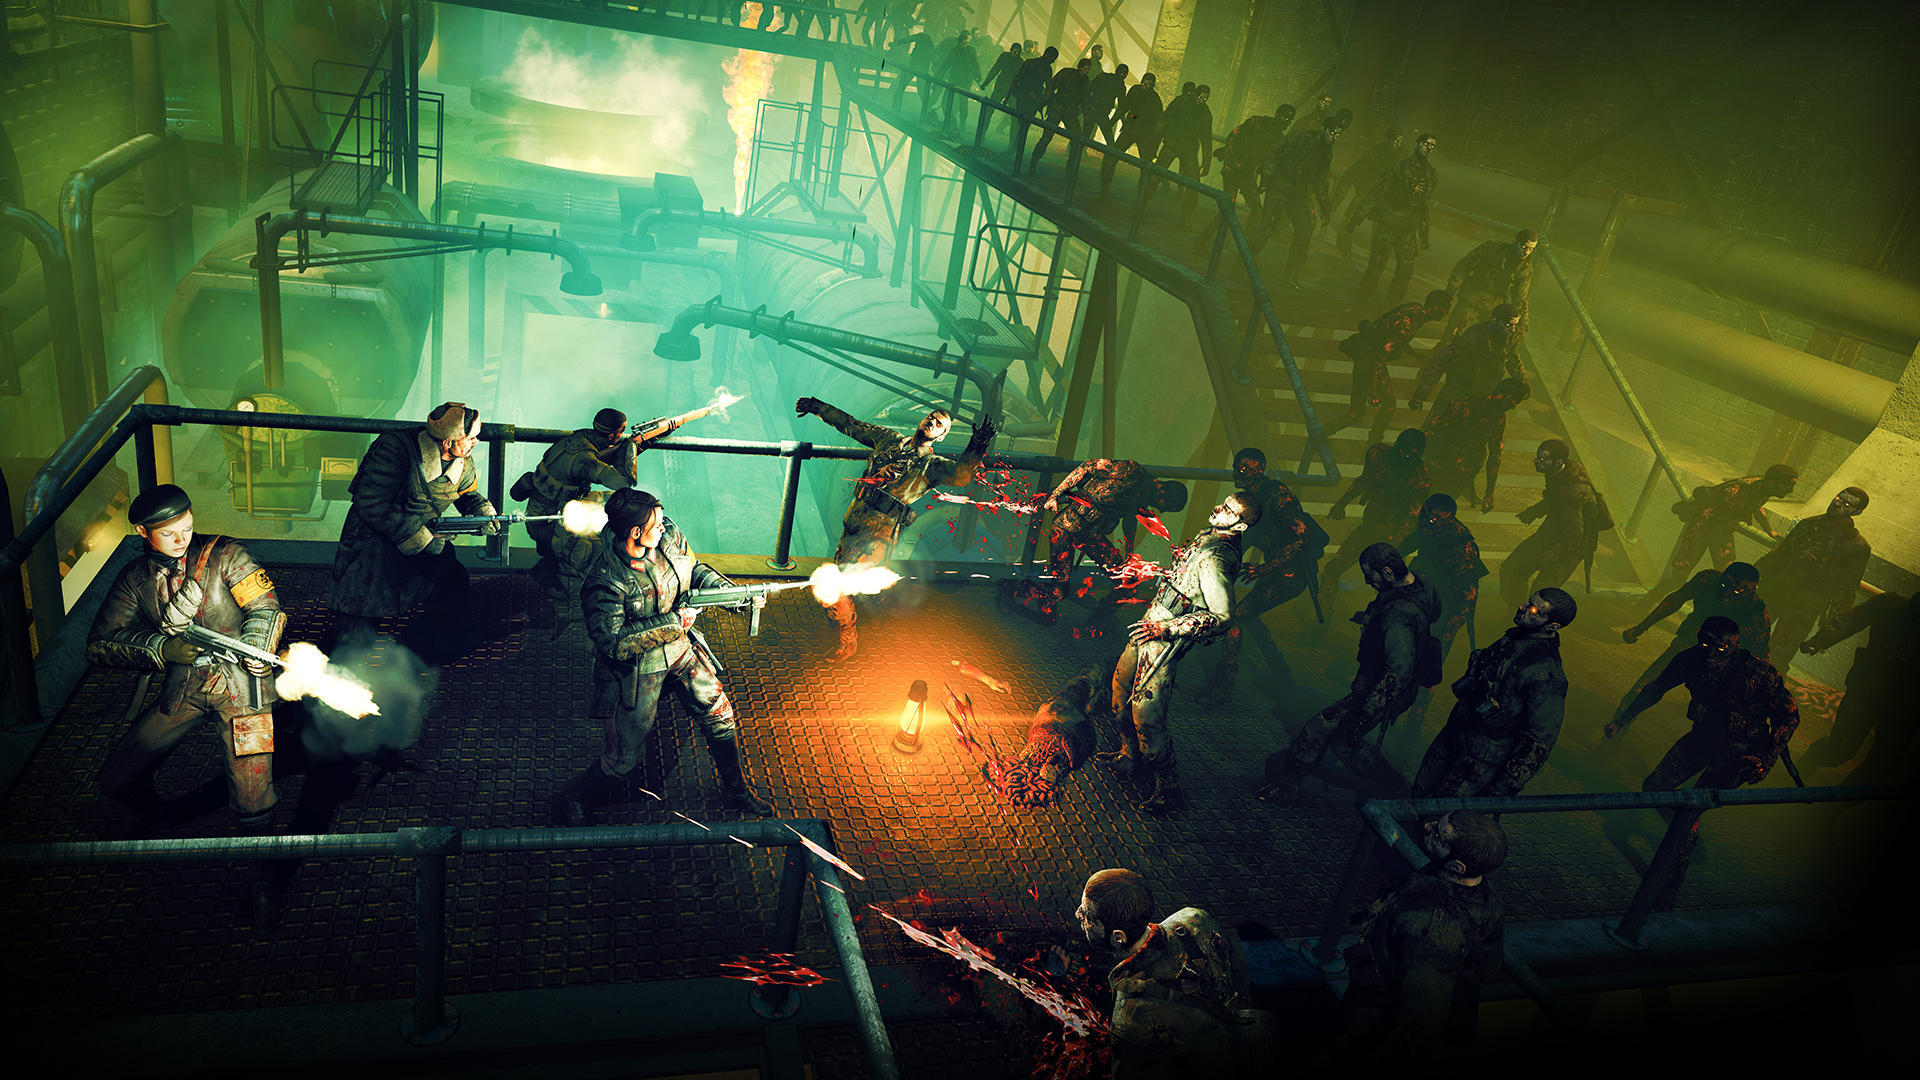 Zombie Army Trilogy on Steam